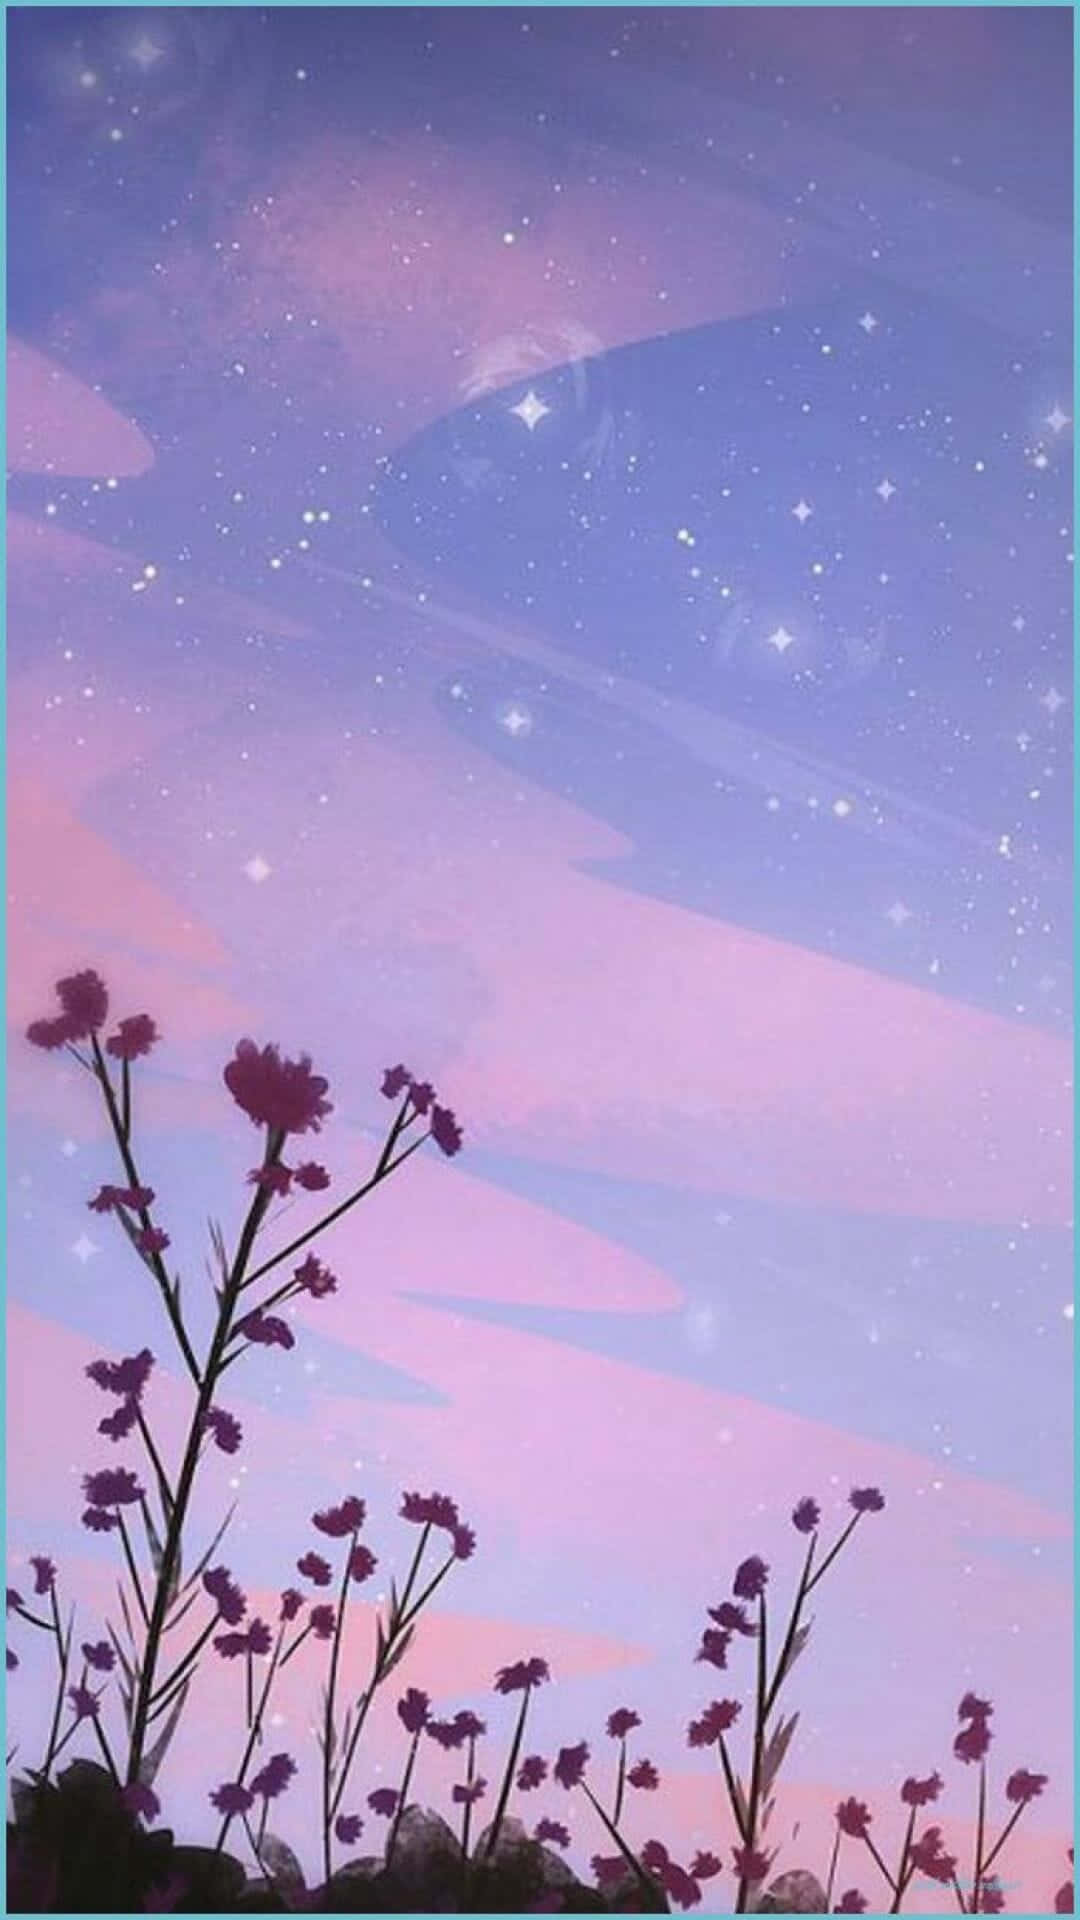 Iphone wallpaper aesthetic, Aesthetic backgrounds, Aesthetic phone wallpaper - Pastel, pastel purple